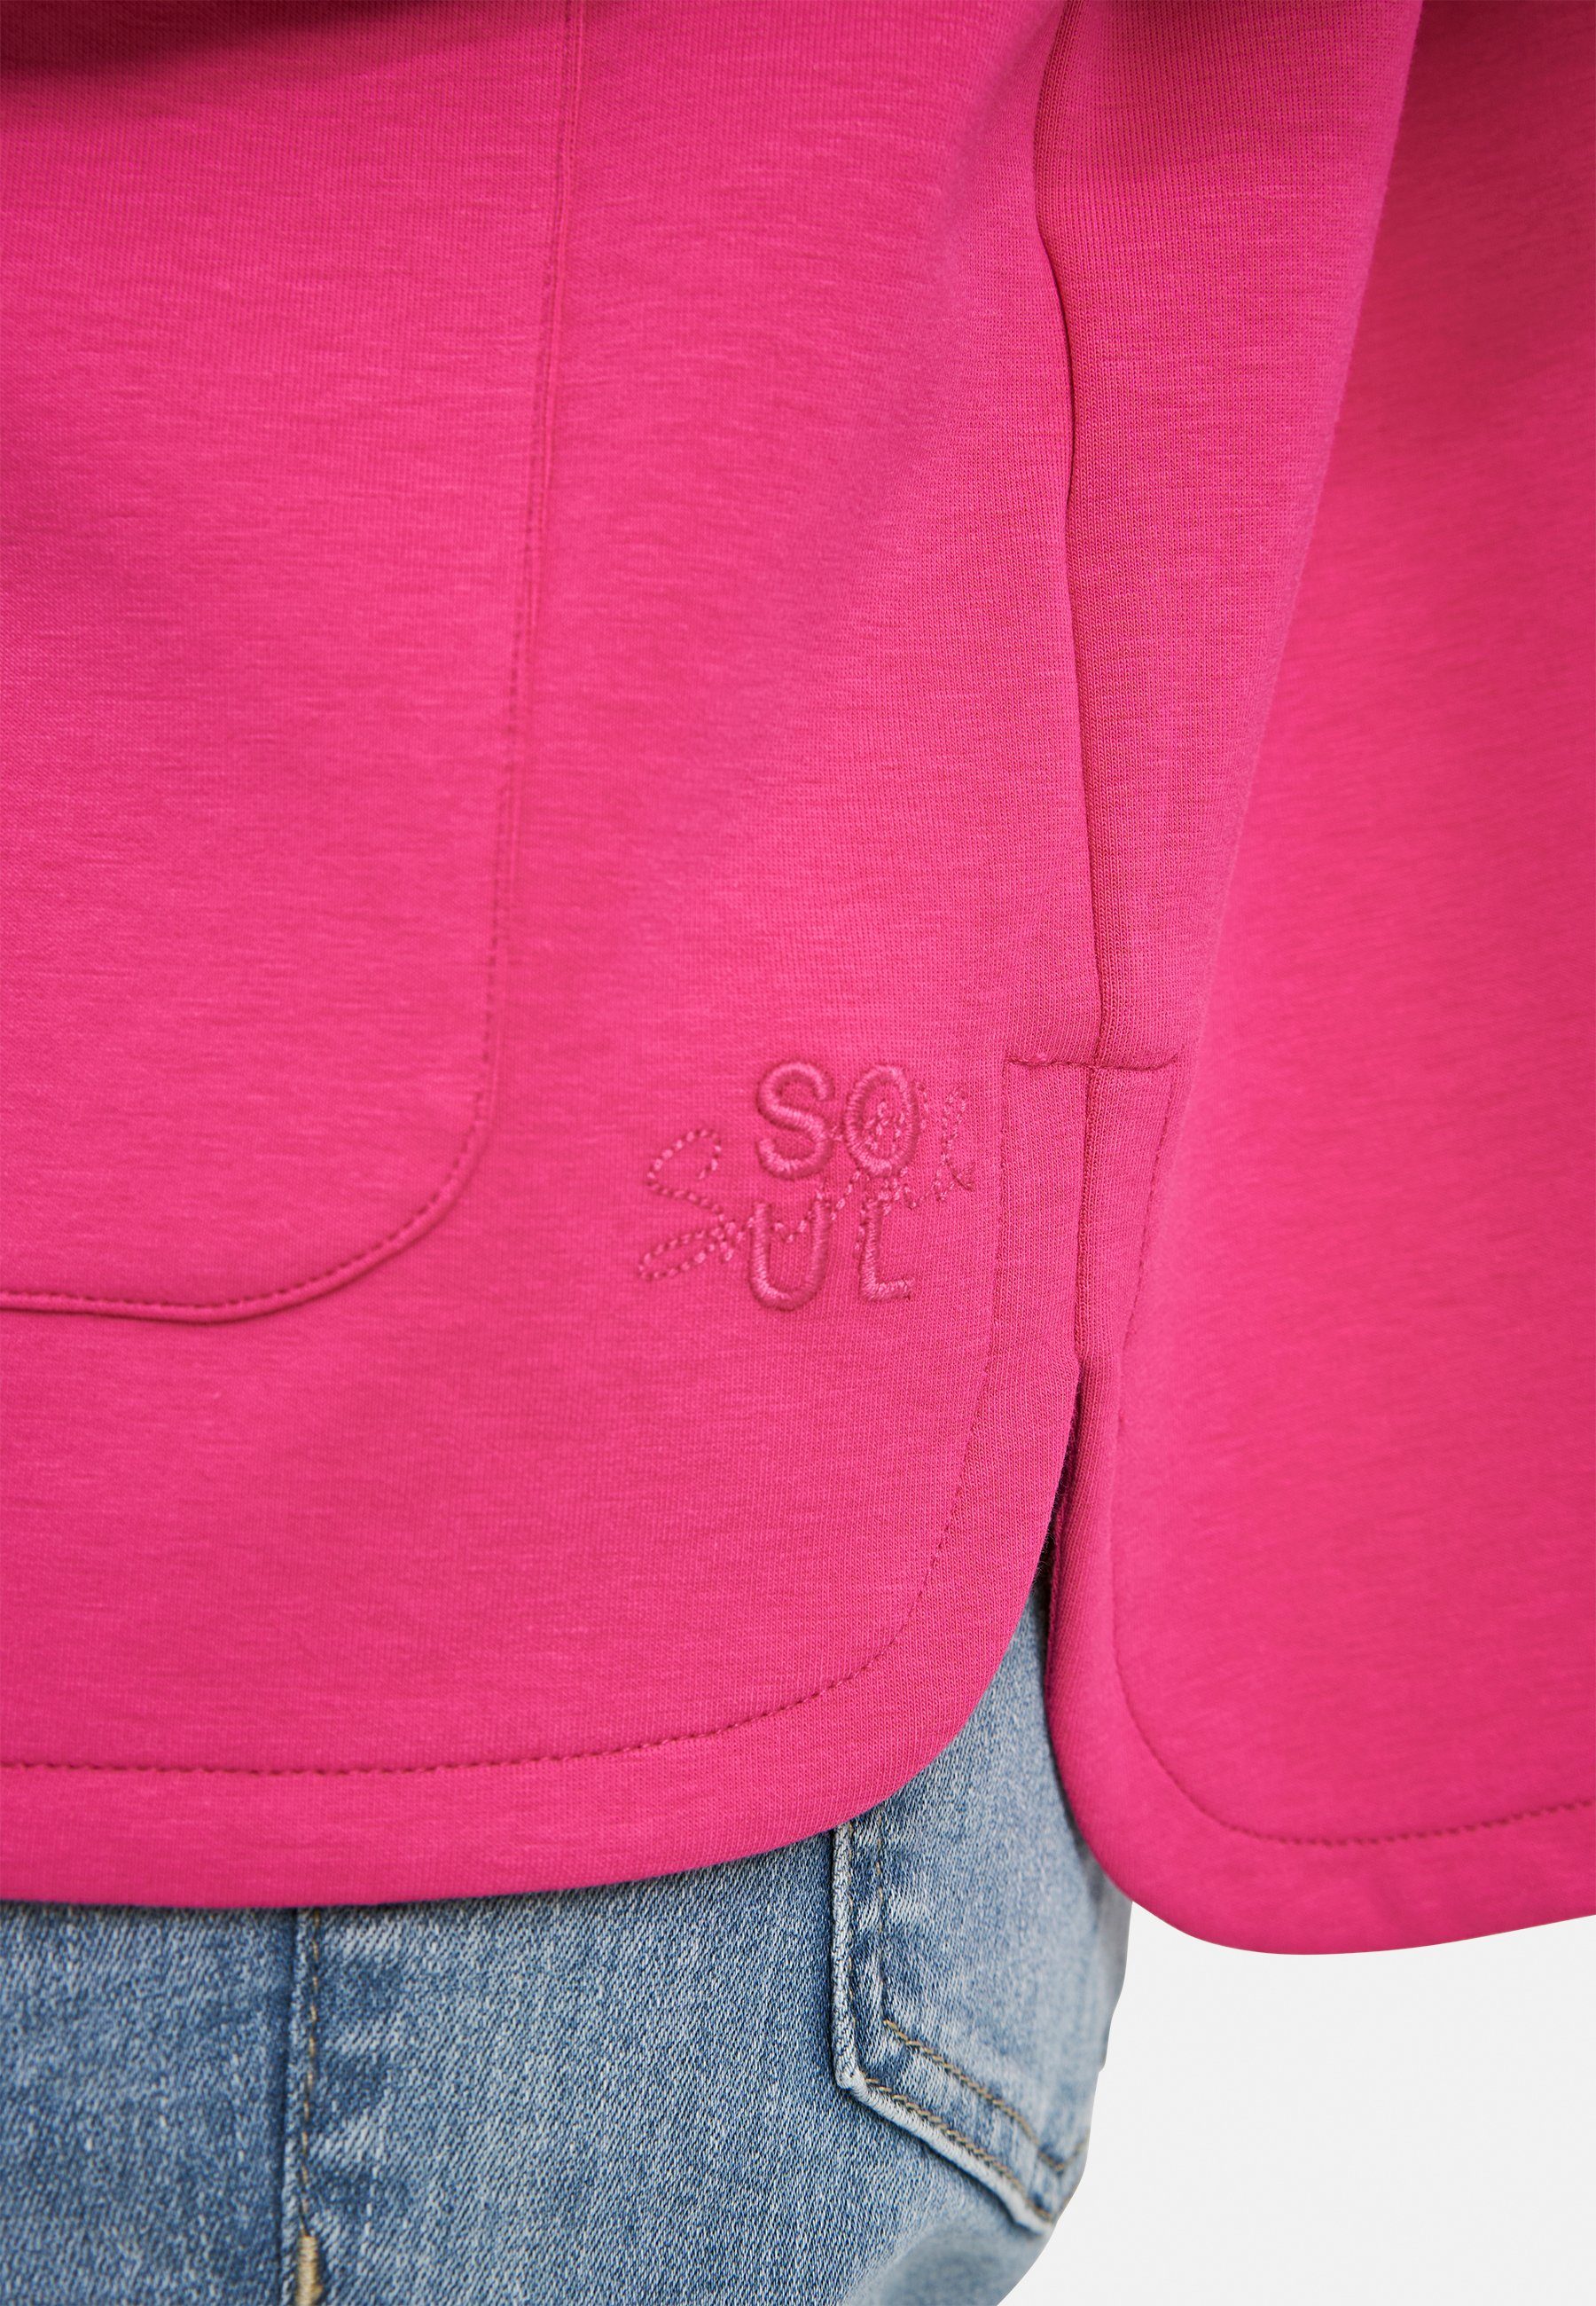 Smith & Soul Sweatjacke Hoodie rosa Pink